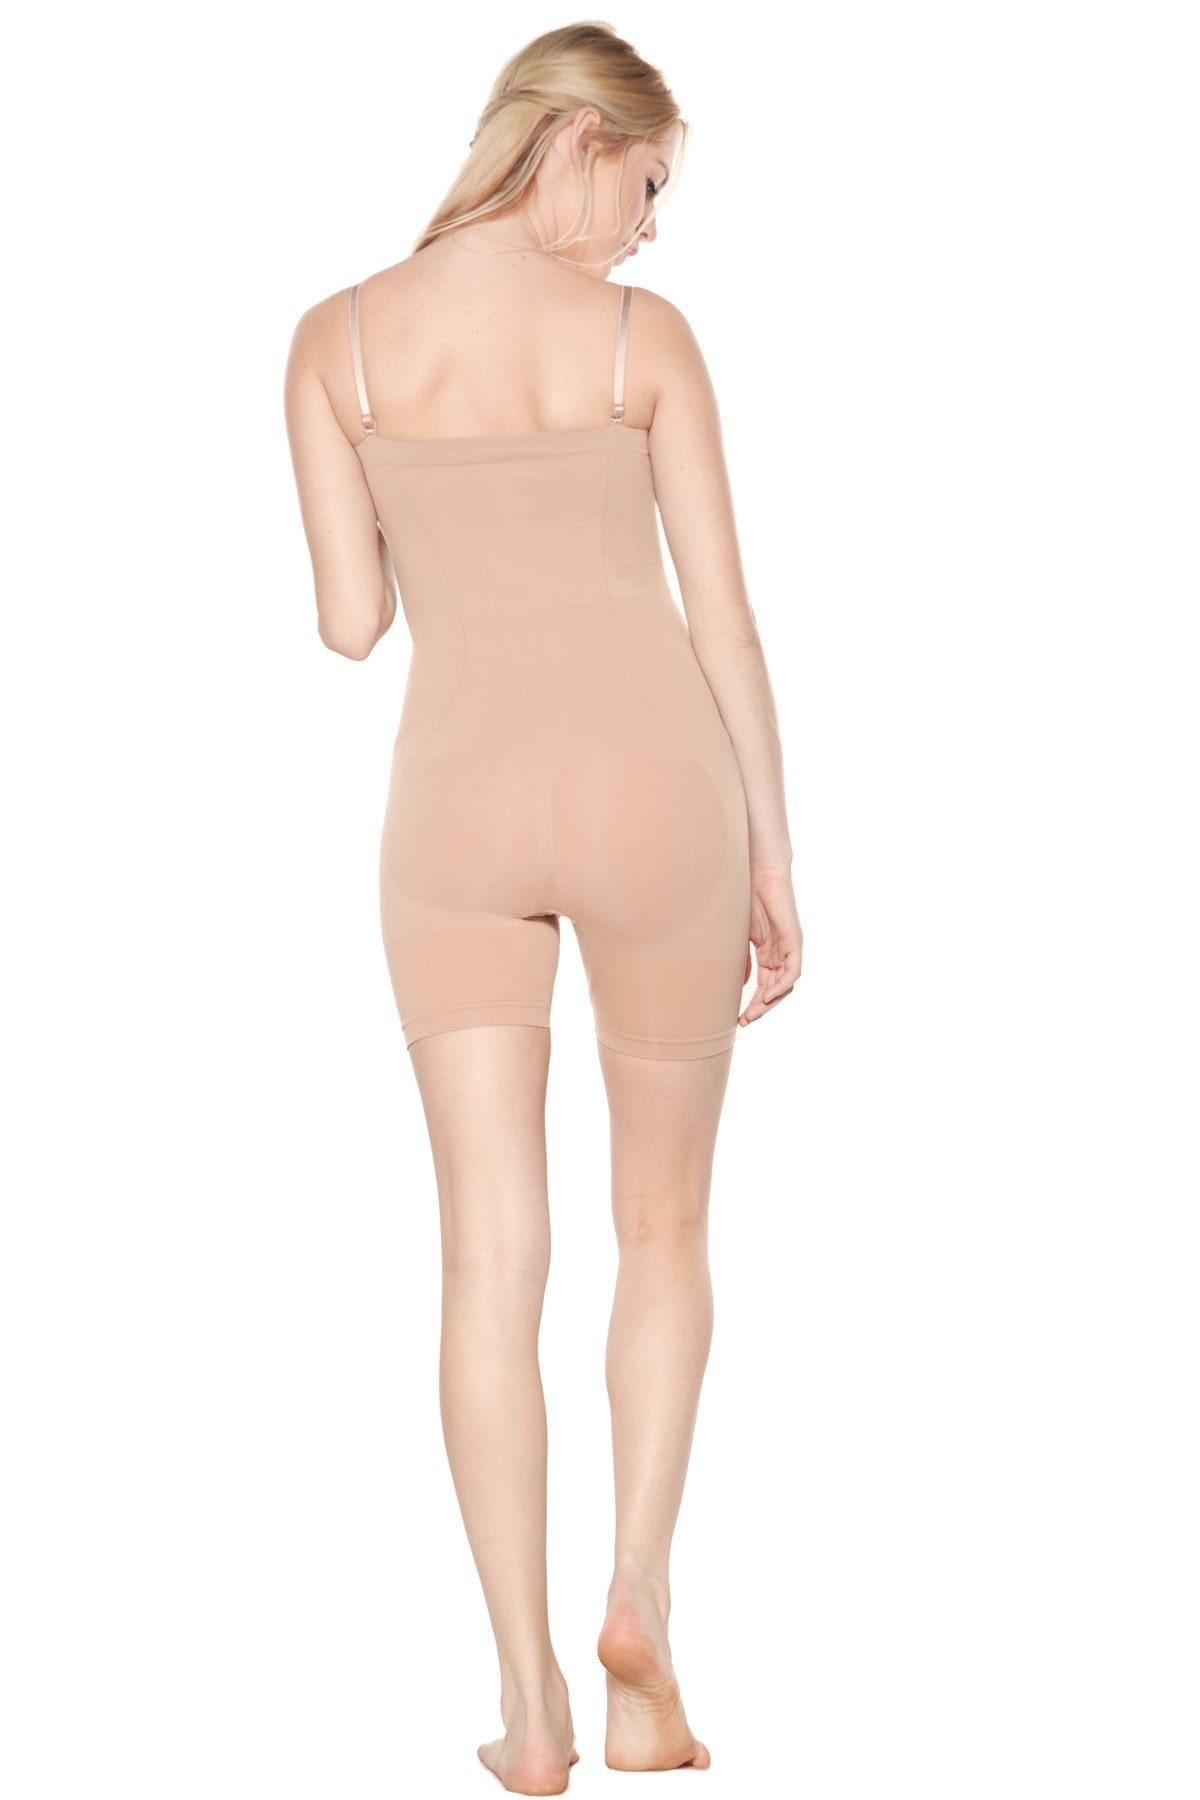 Women's Rhonda Shear 4807 Up All Night Lace Bodysuit (Nude/Black XL)